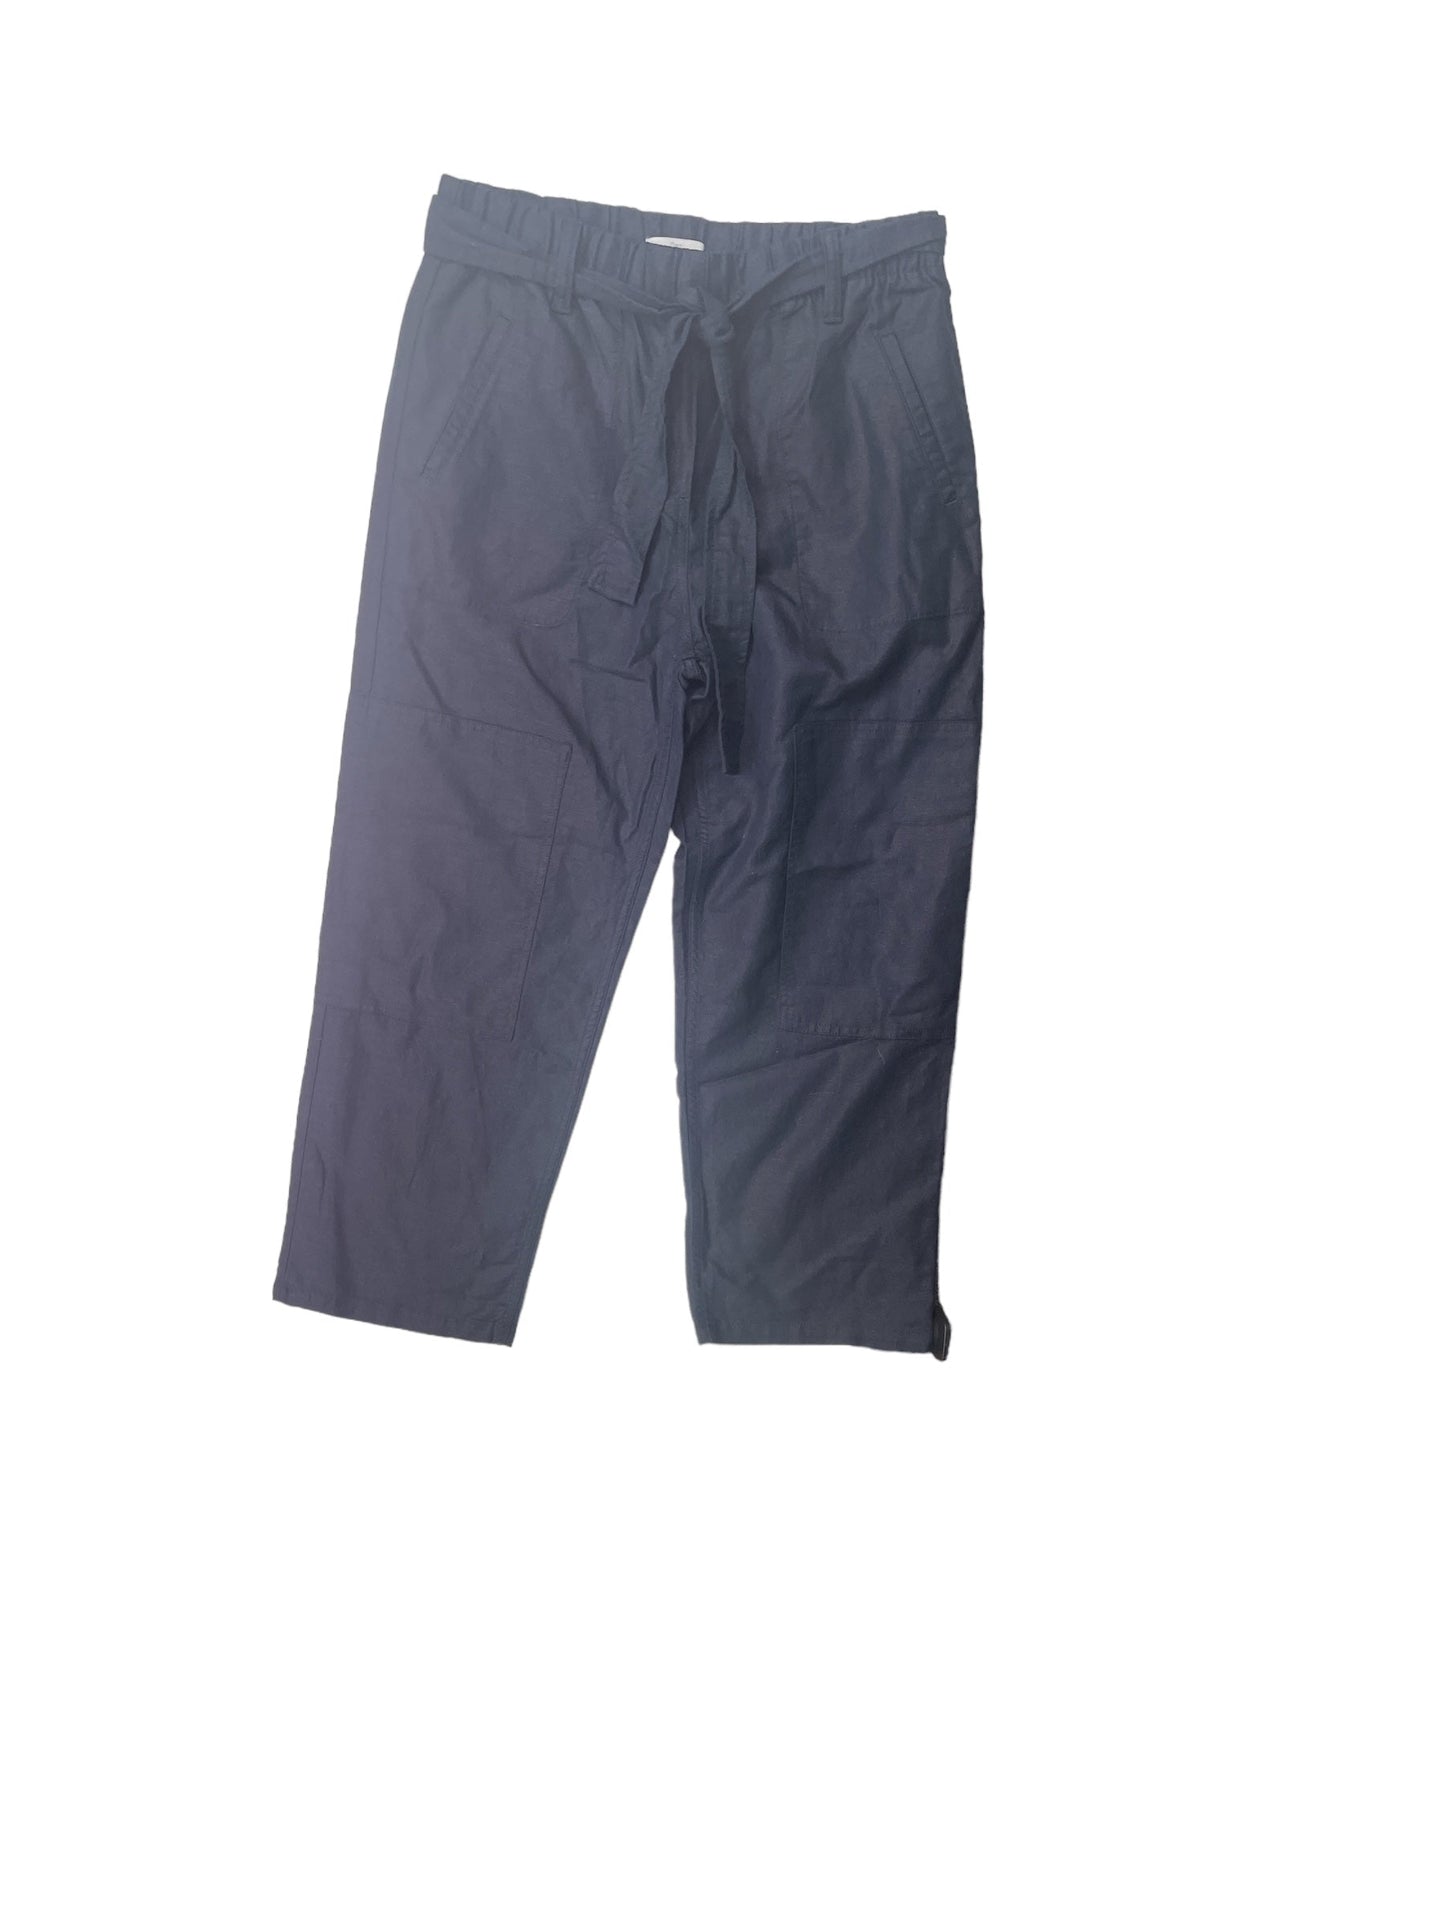 Navy Pants Cropped Gap, Size S